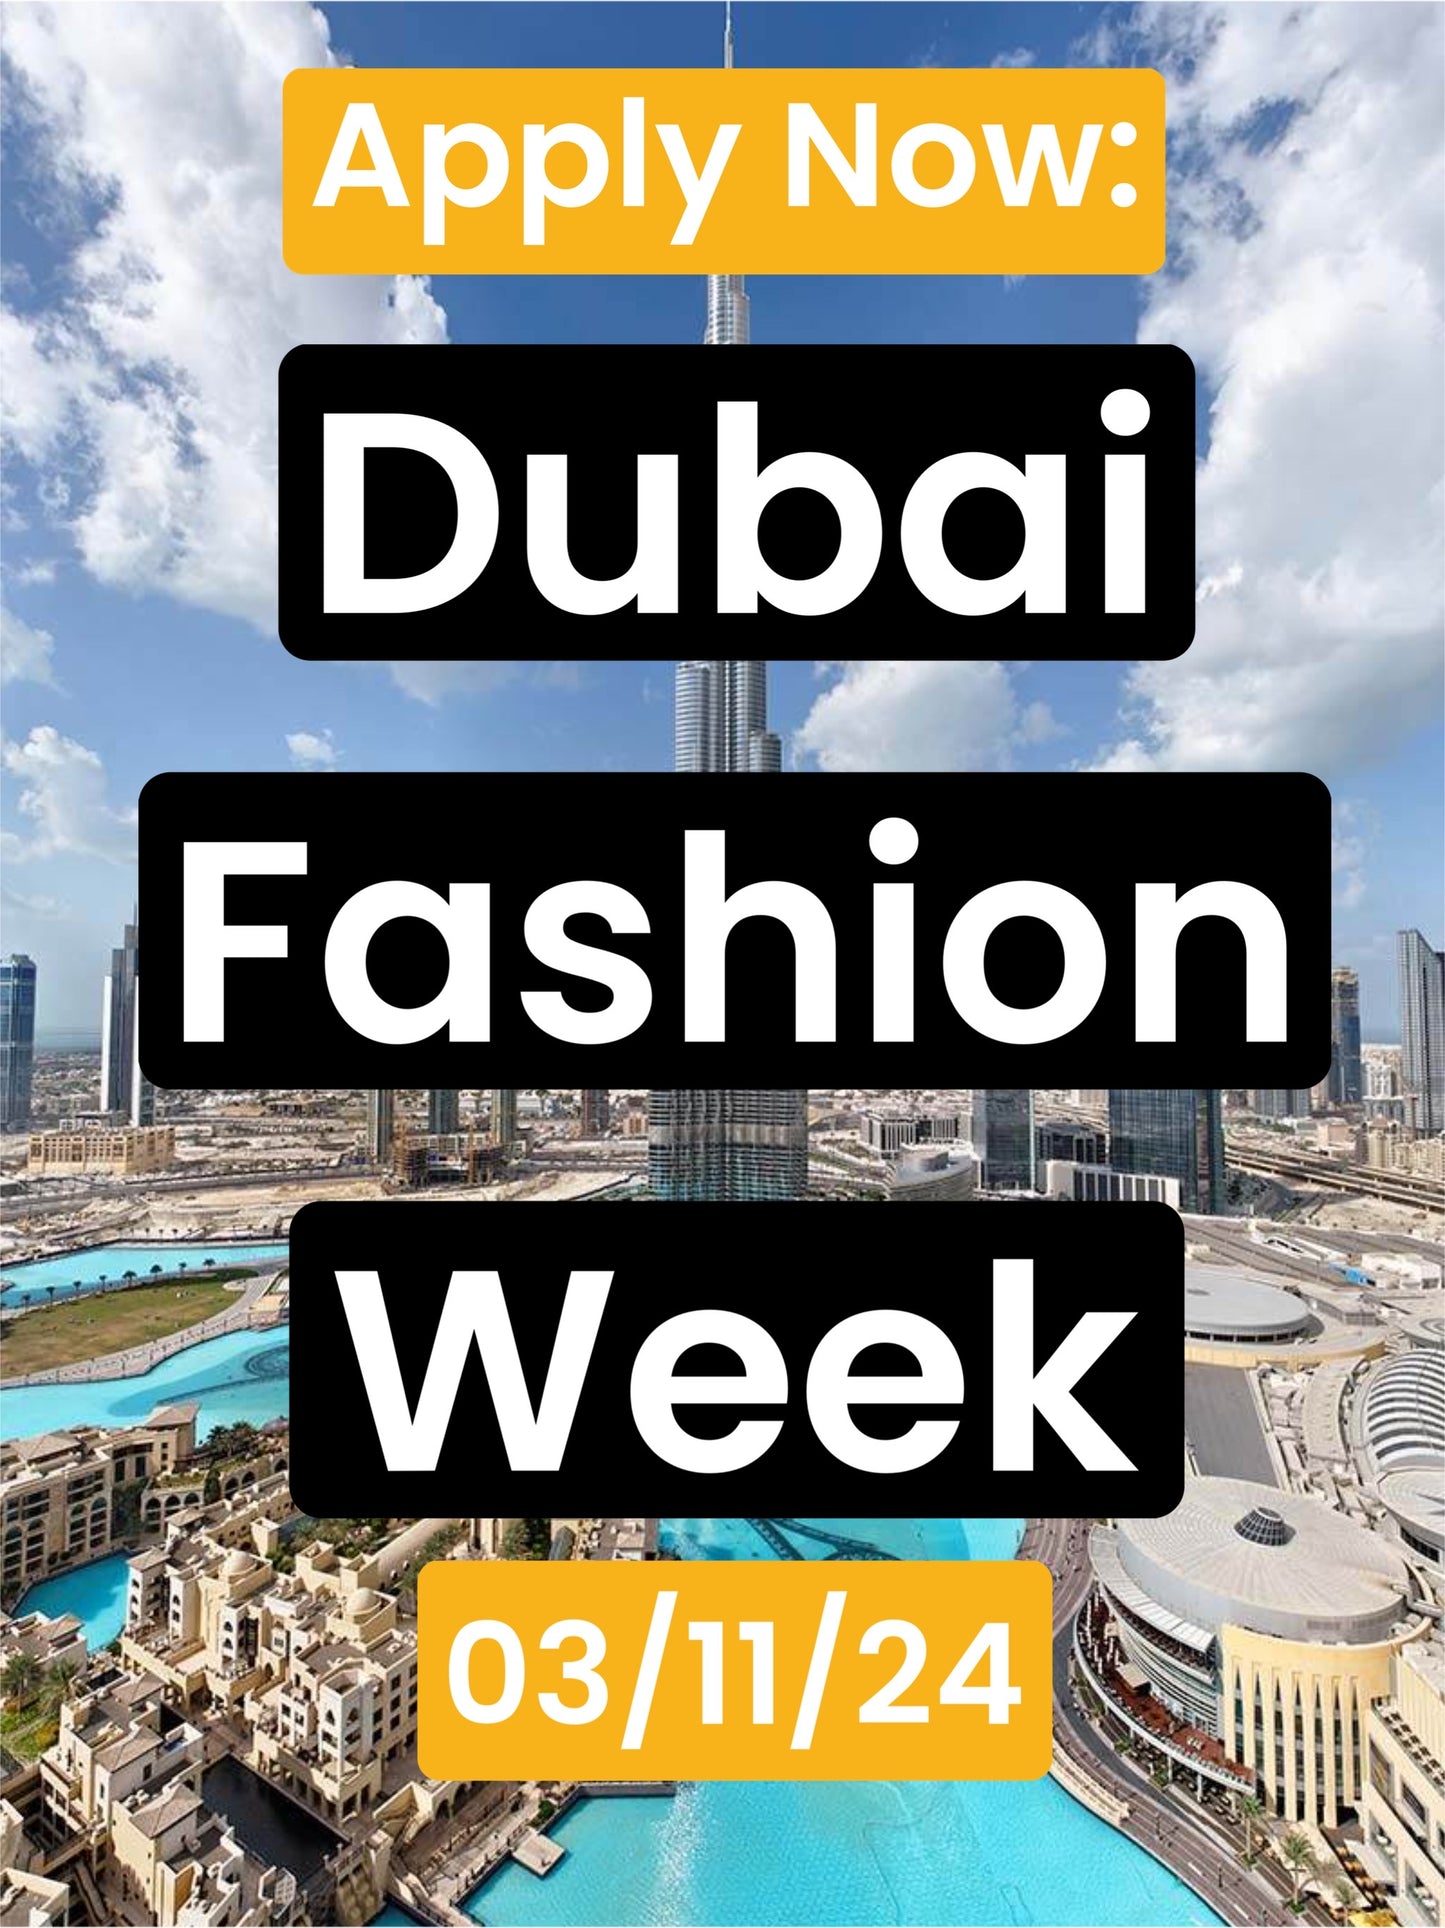 General Admission Ticket: Dubai Fashion Week 03/11/24